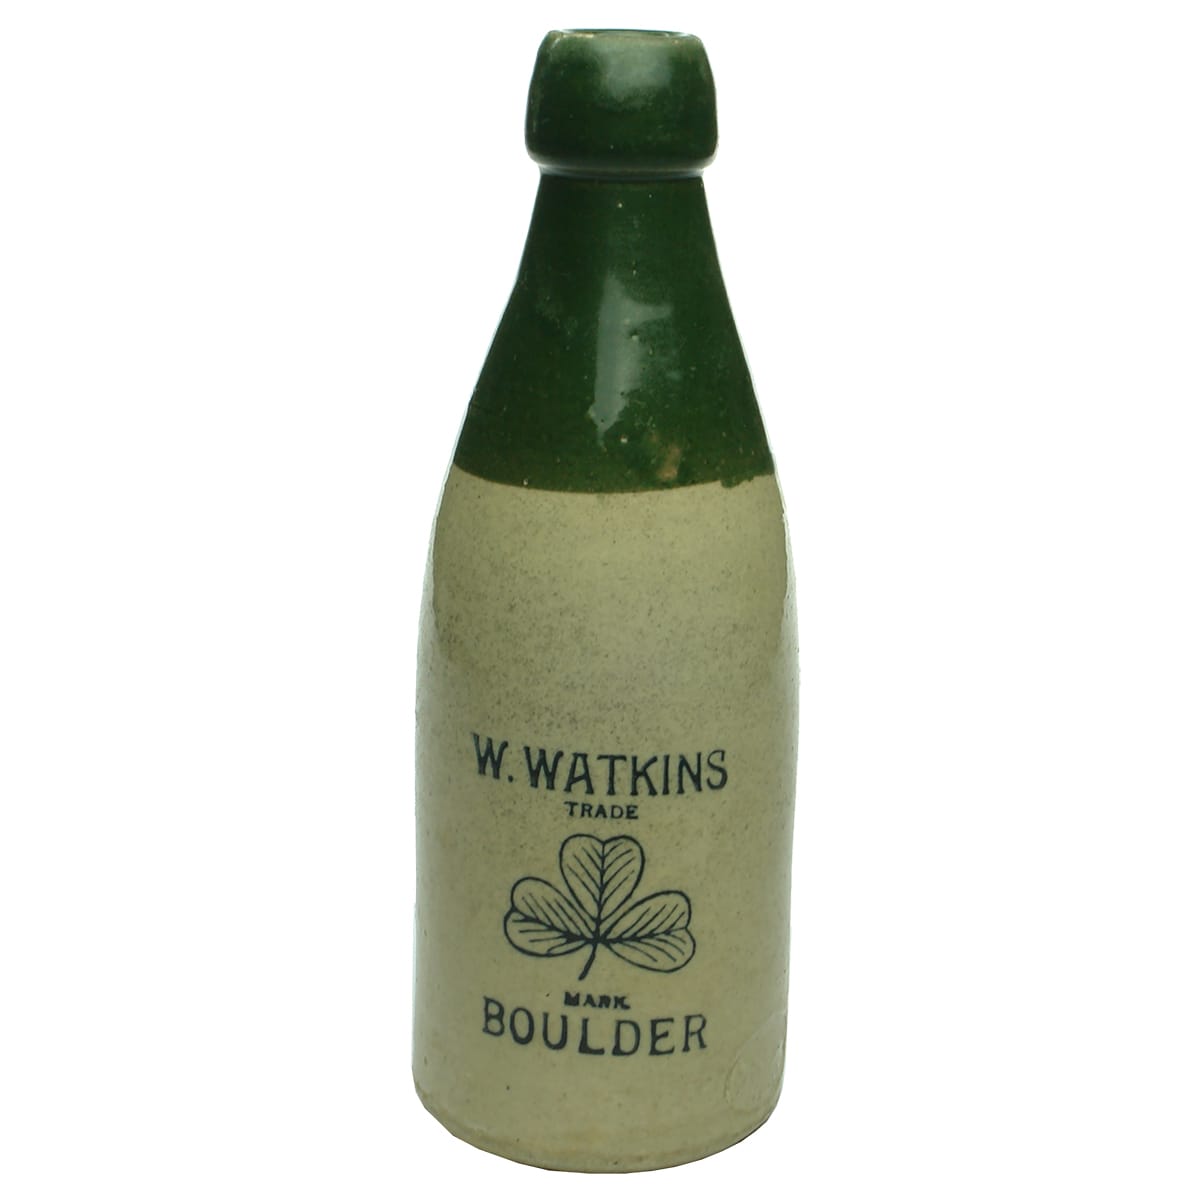 Ginger Beer. Watkins, Boulder. Champagne. Green Top. Price Bristol. (Western Australia)